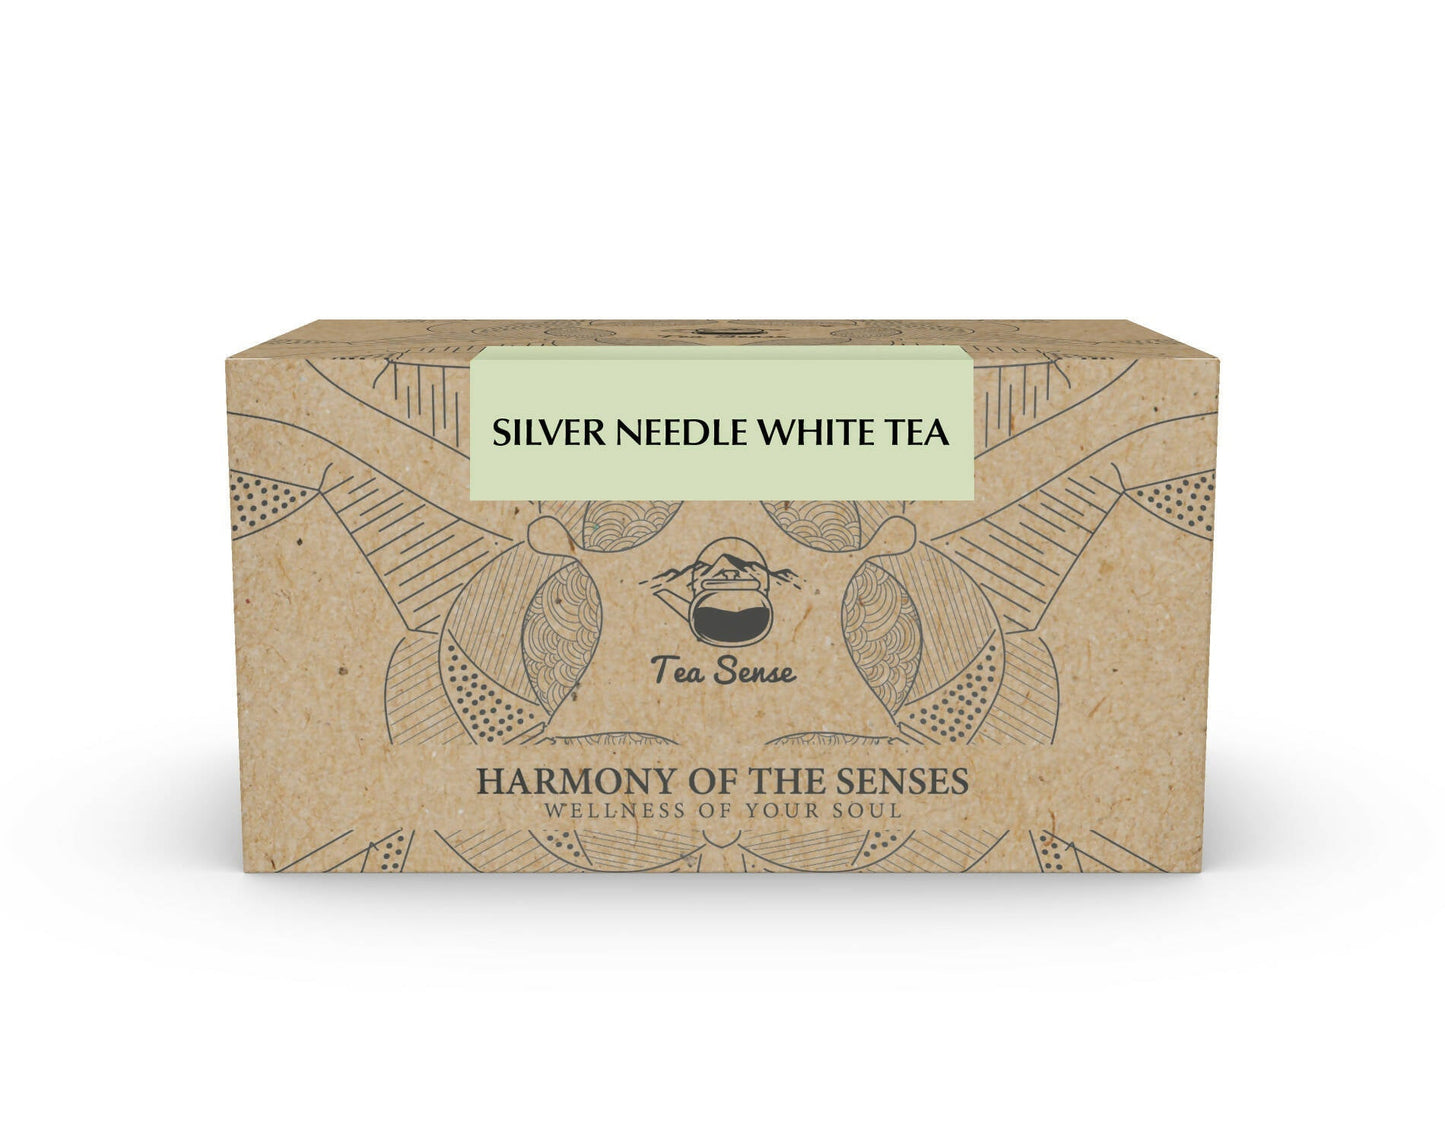 Tea Sense Silver Needle White Tea Bags Box - buy in USA, Australia, Canada